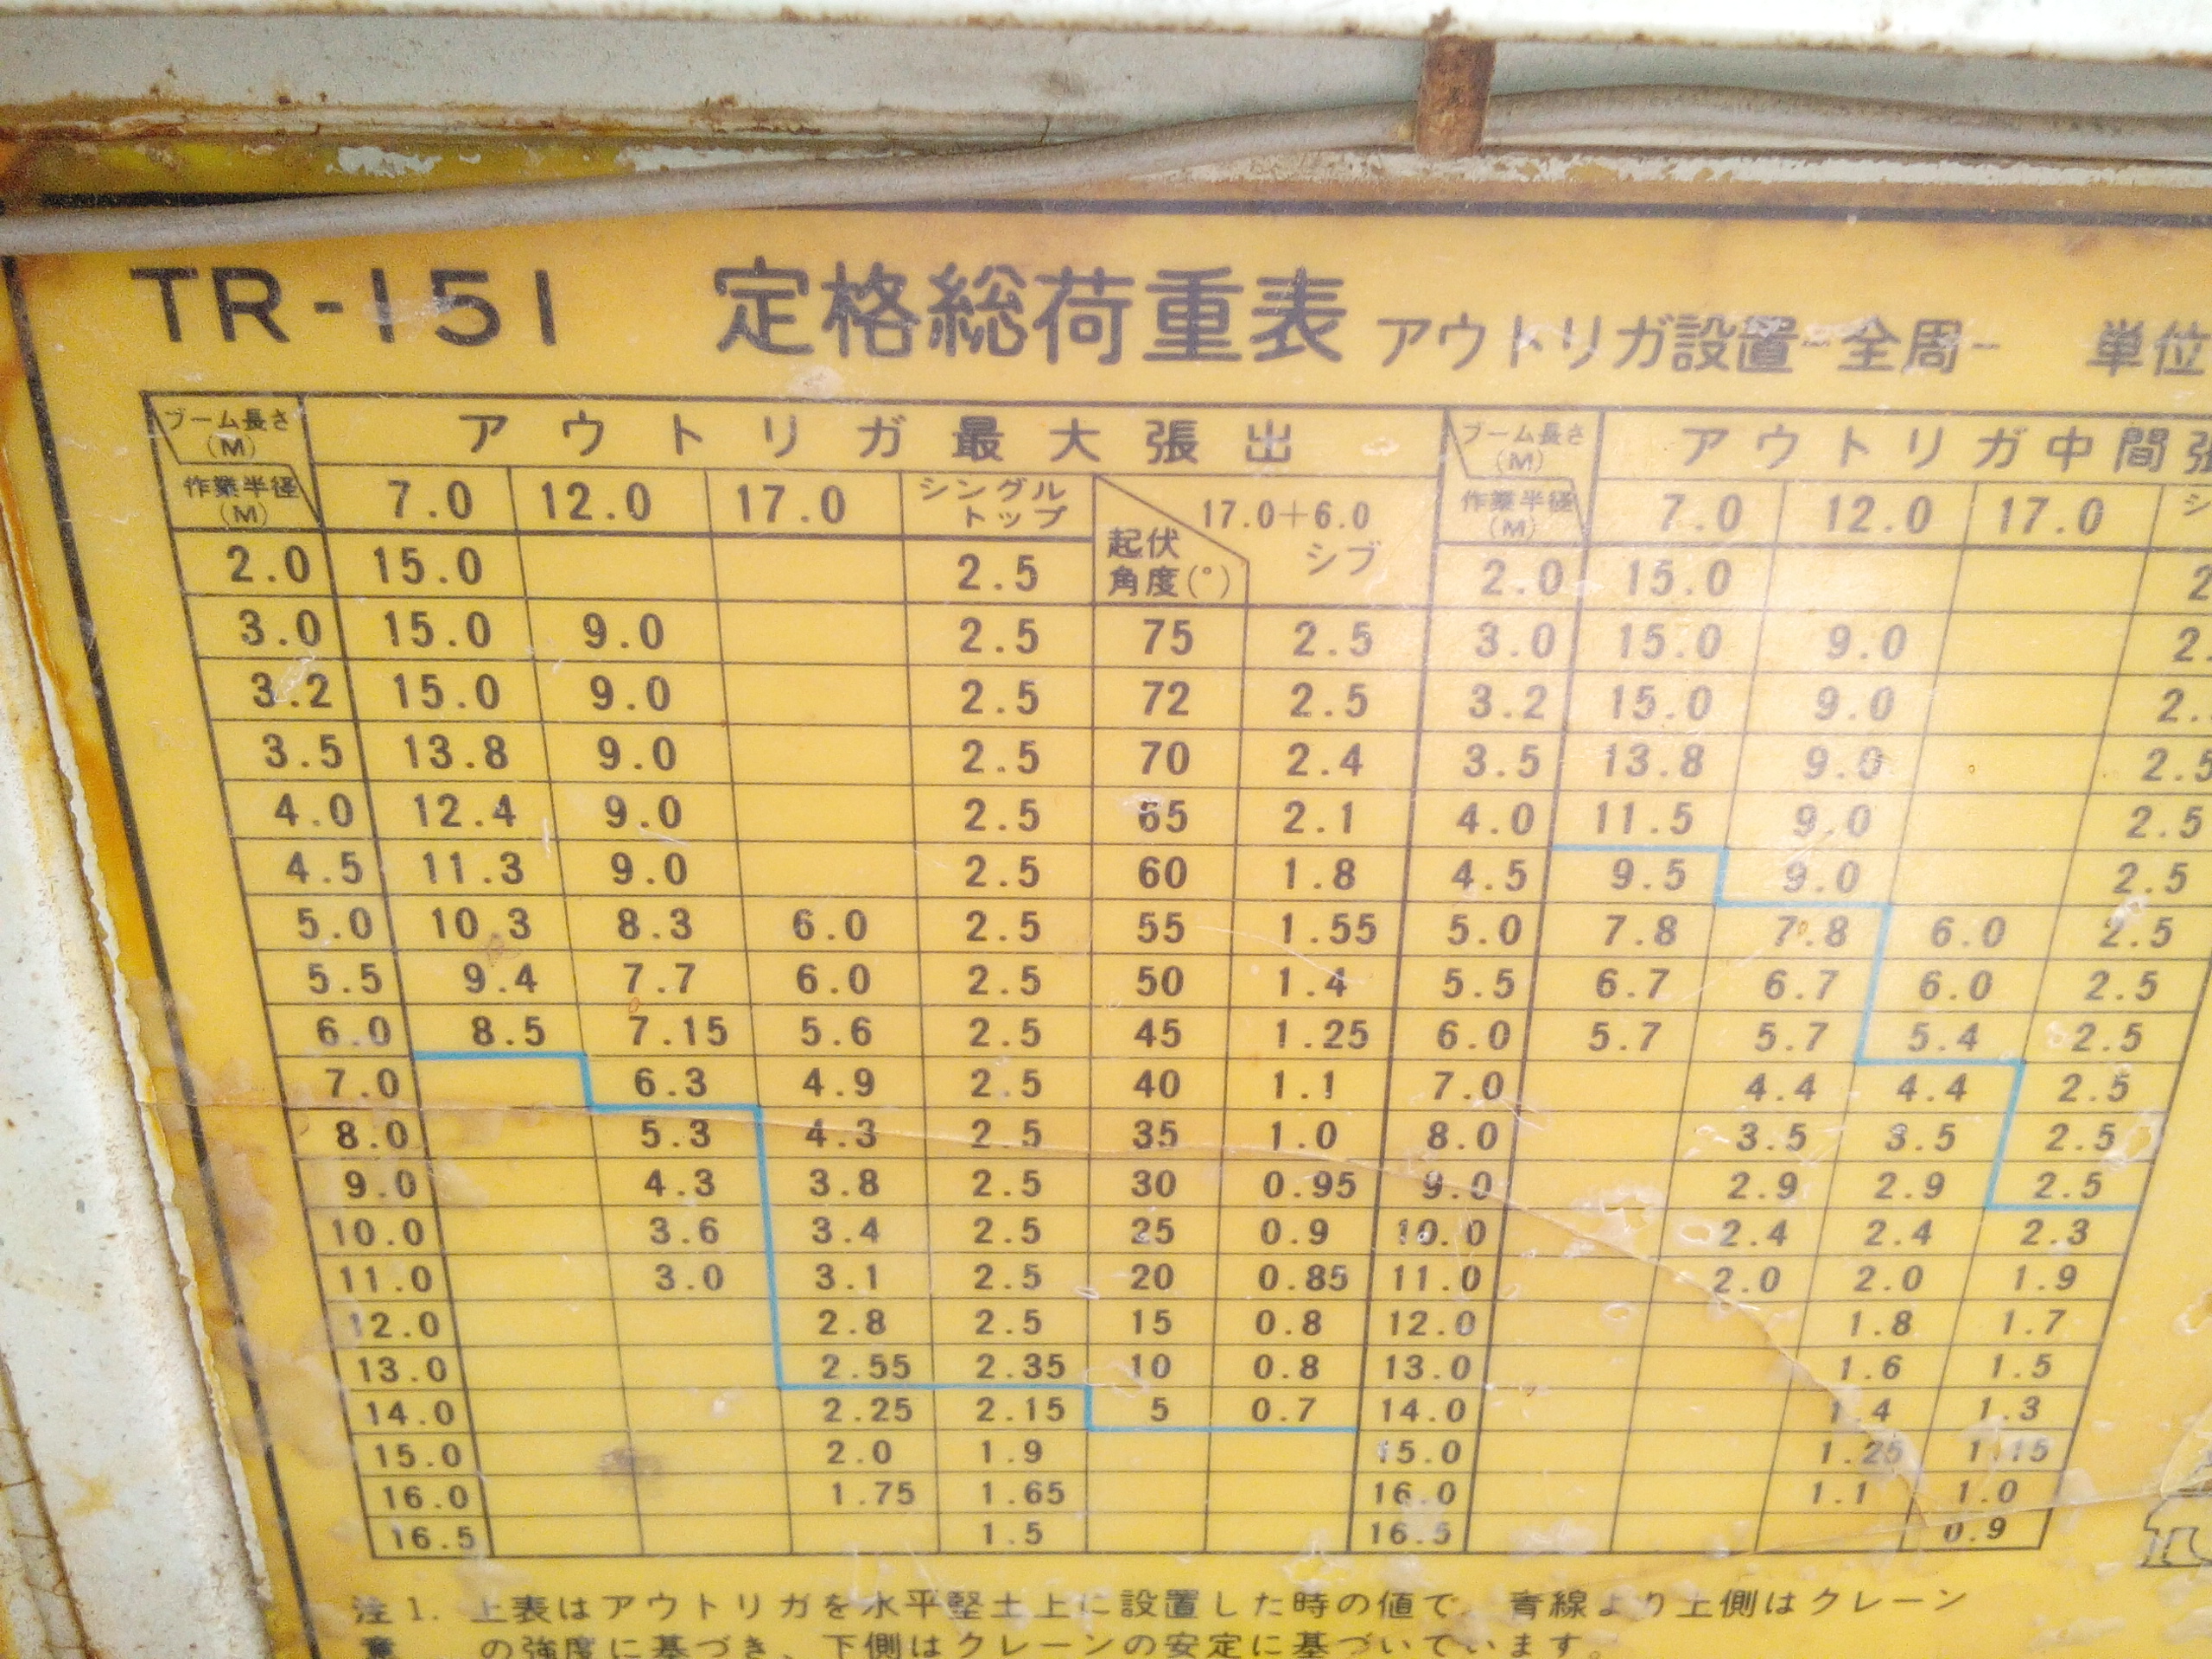 Kato Crane 35 Ton Load Chart